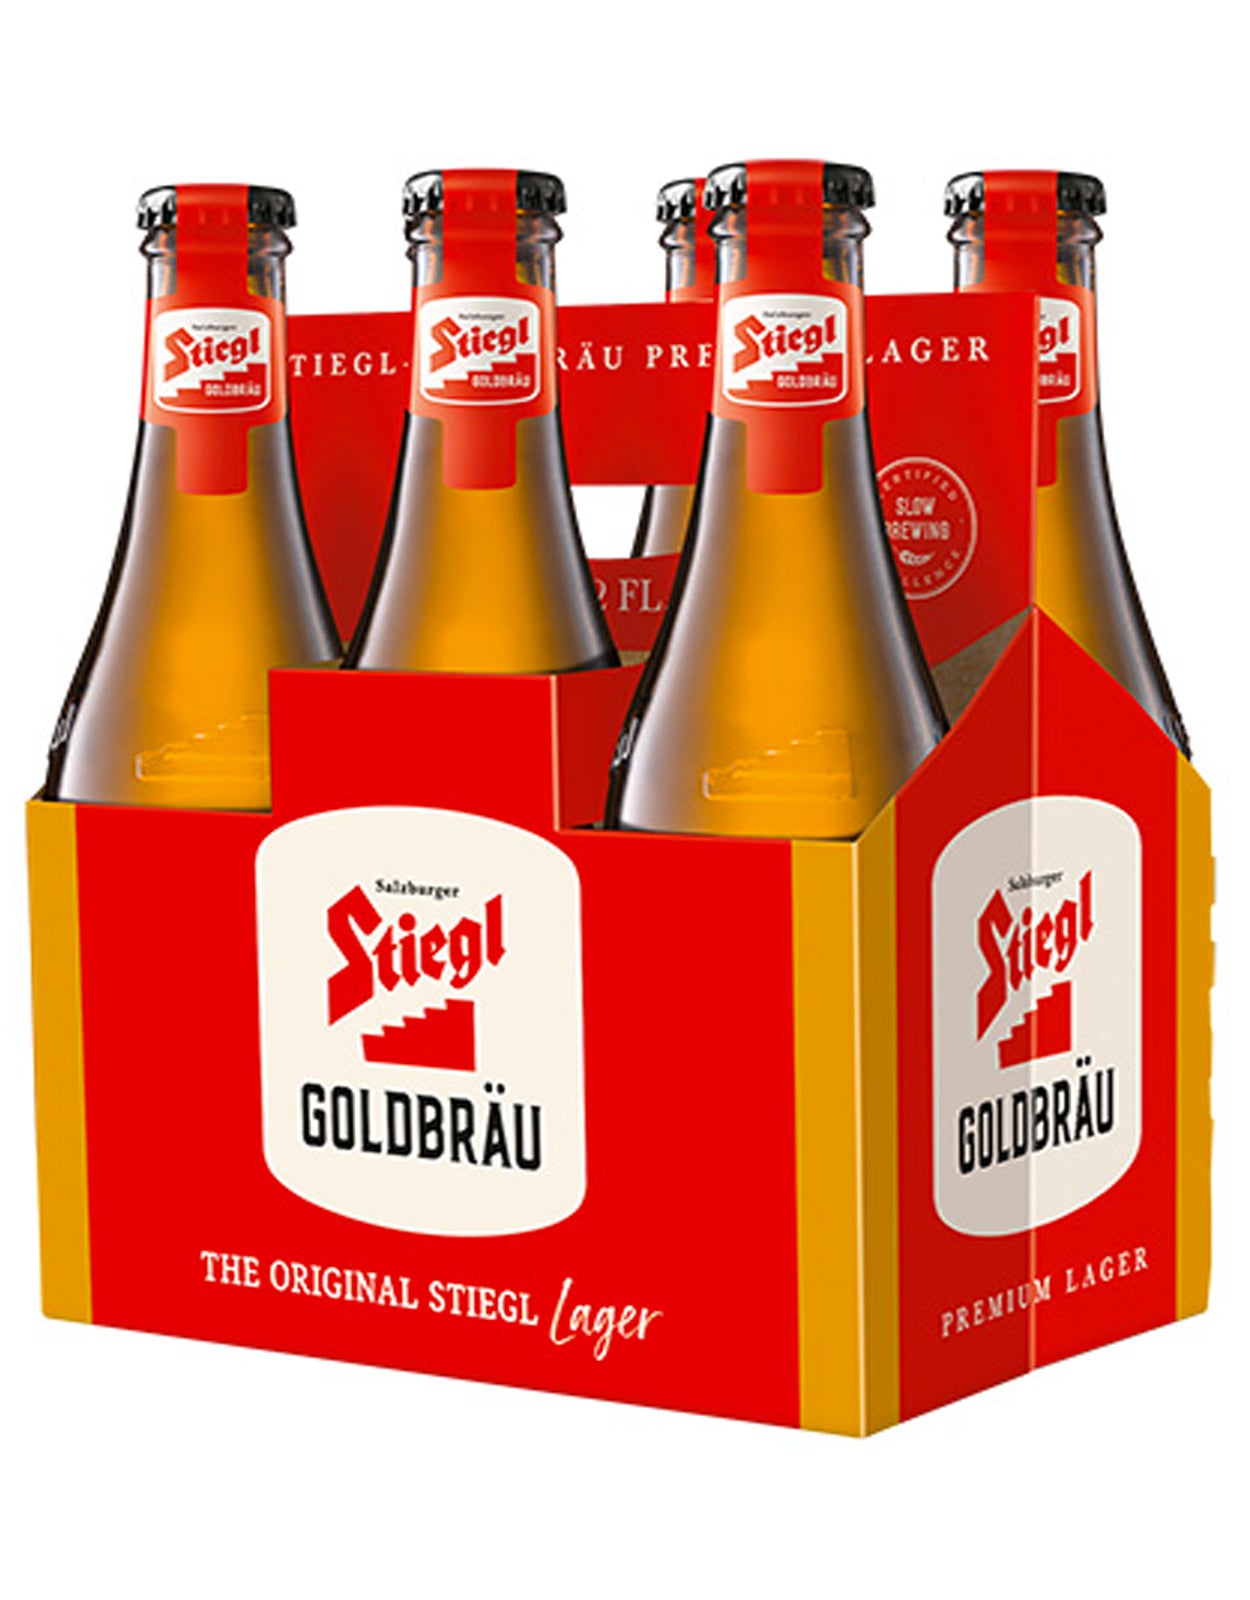 Stiegl Goldbrau Lager 330 ml - 6 bottles